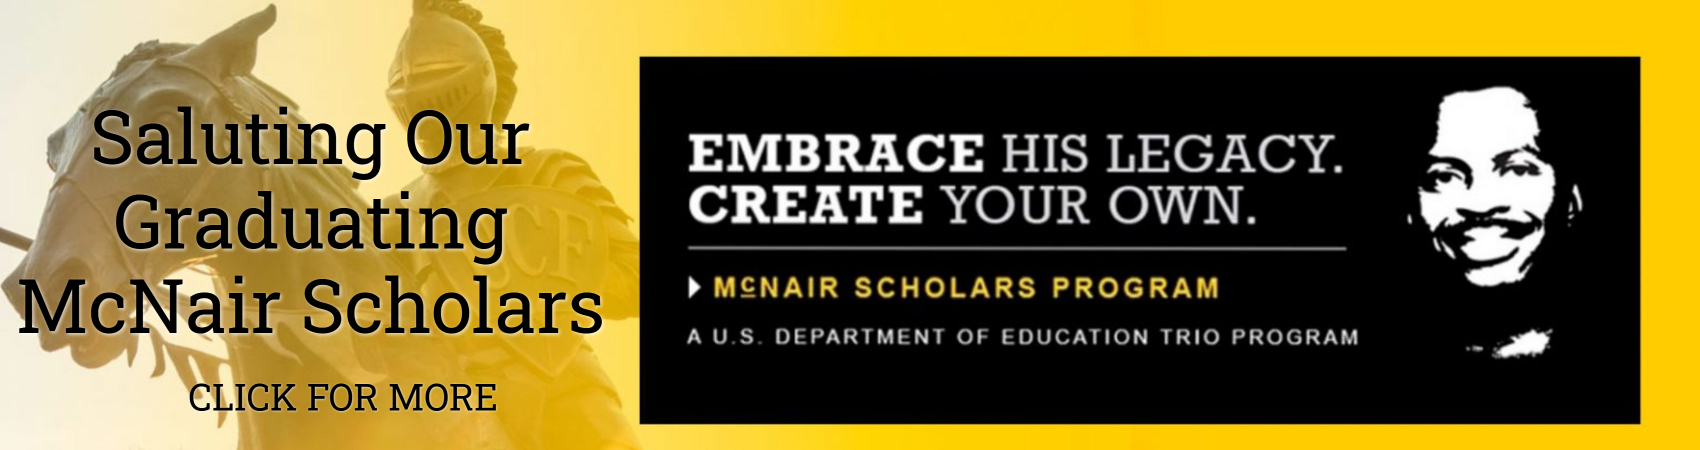 Spring 2020 Graduating McNair Scholars